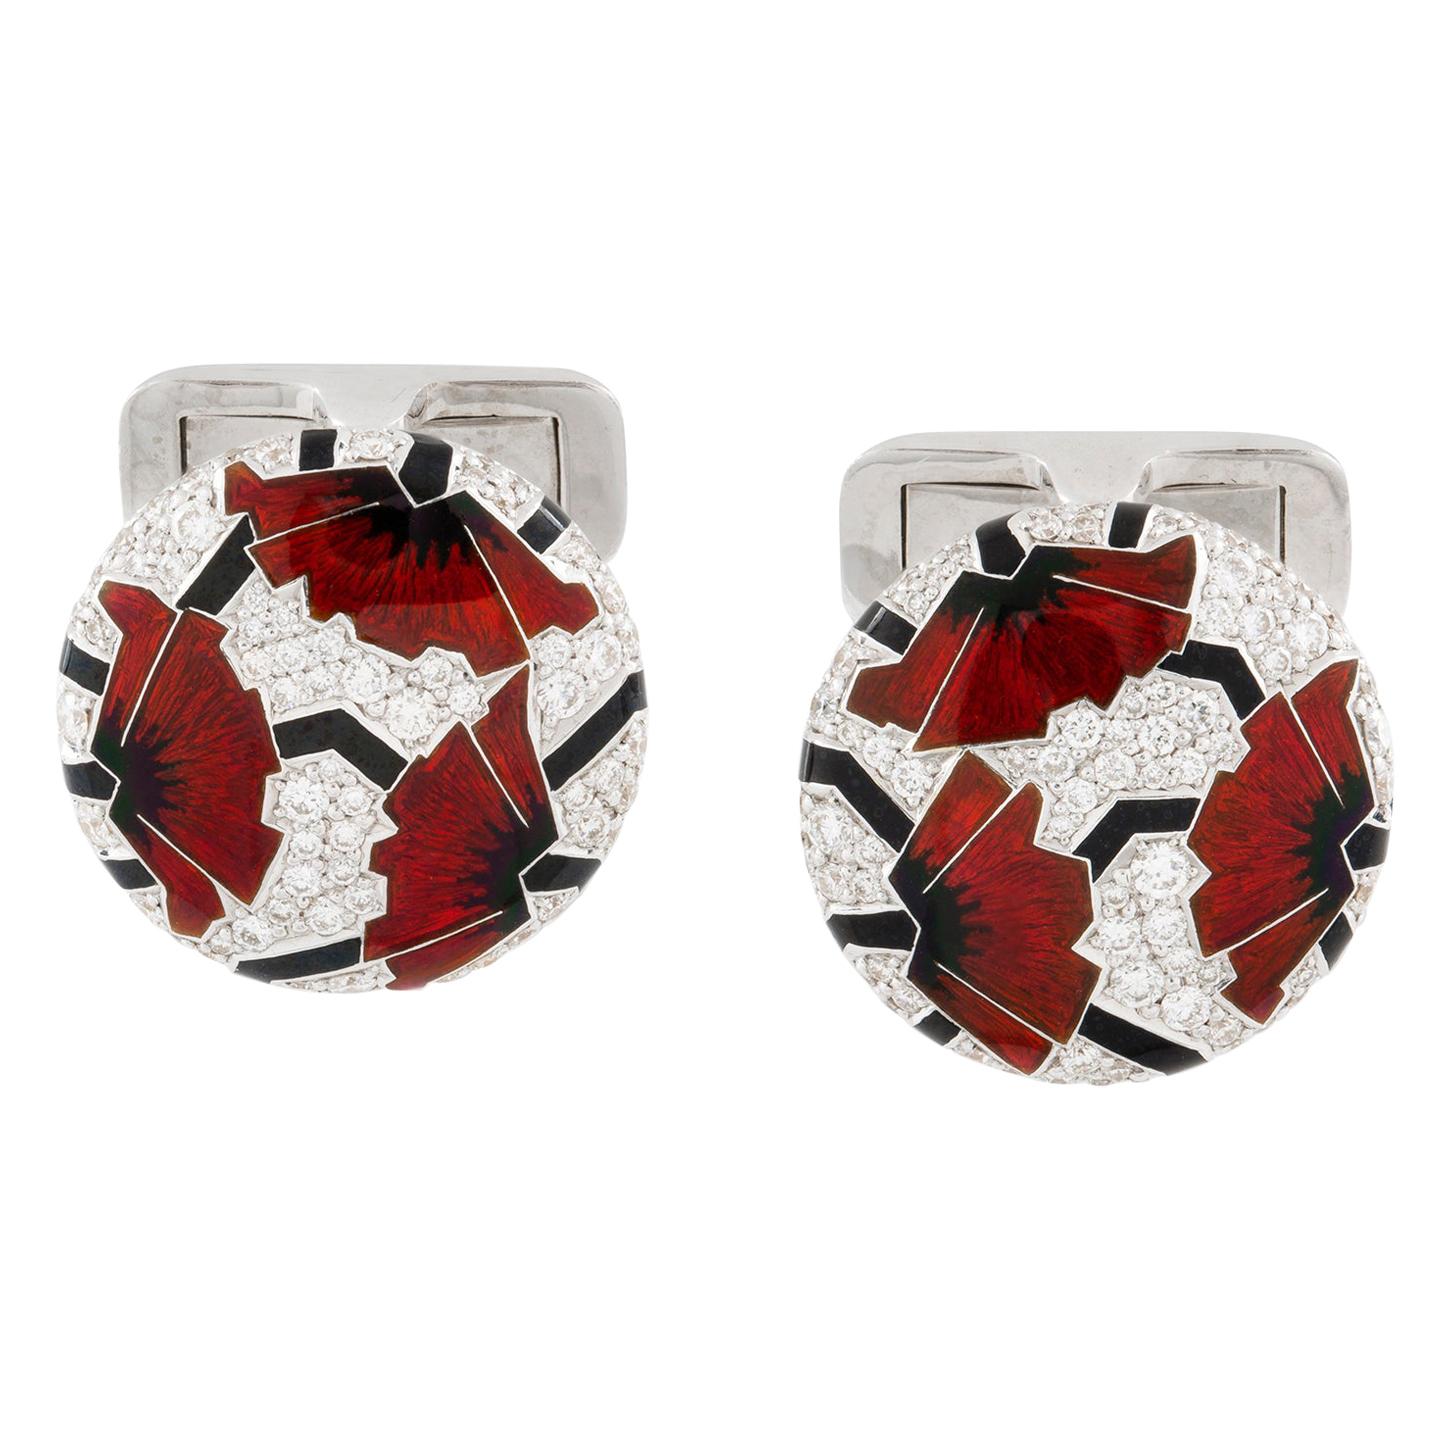 Pair of Red Poppies Art Deco Style Cufflinks by Ilgiz F